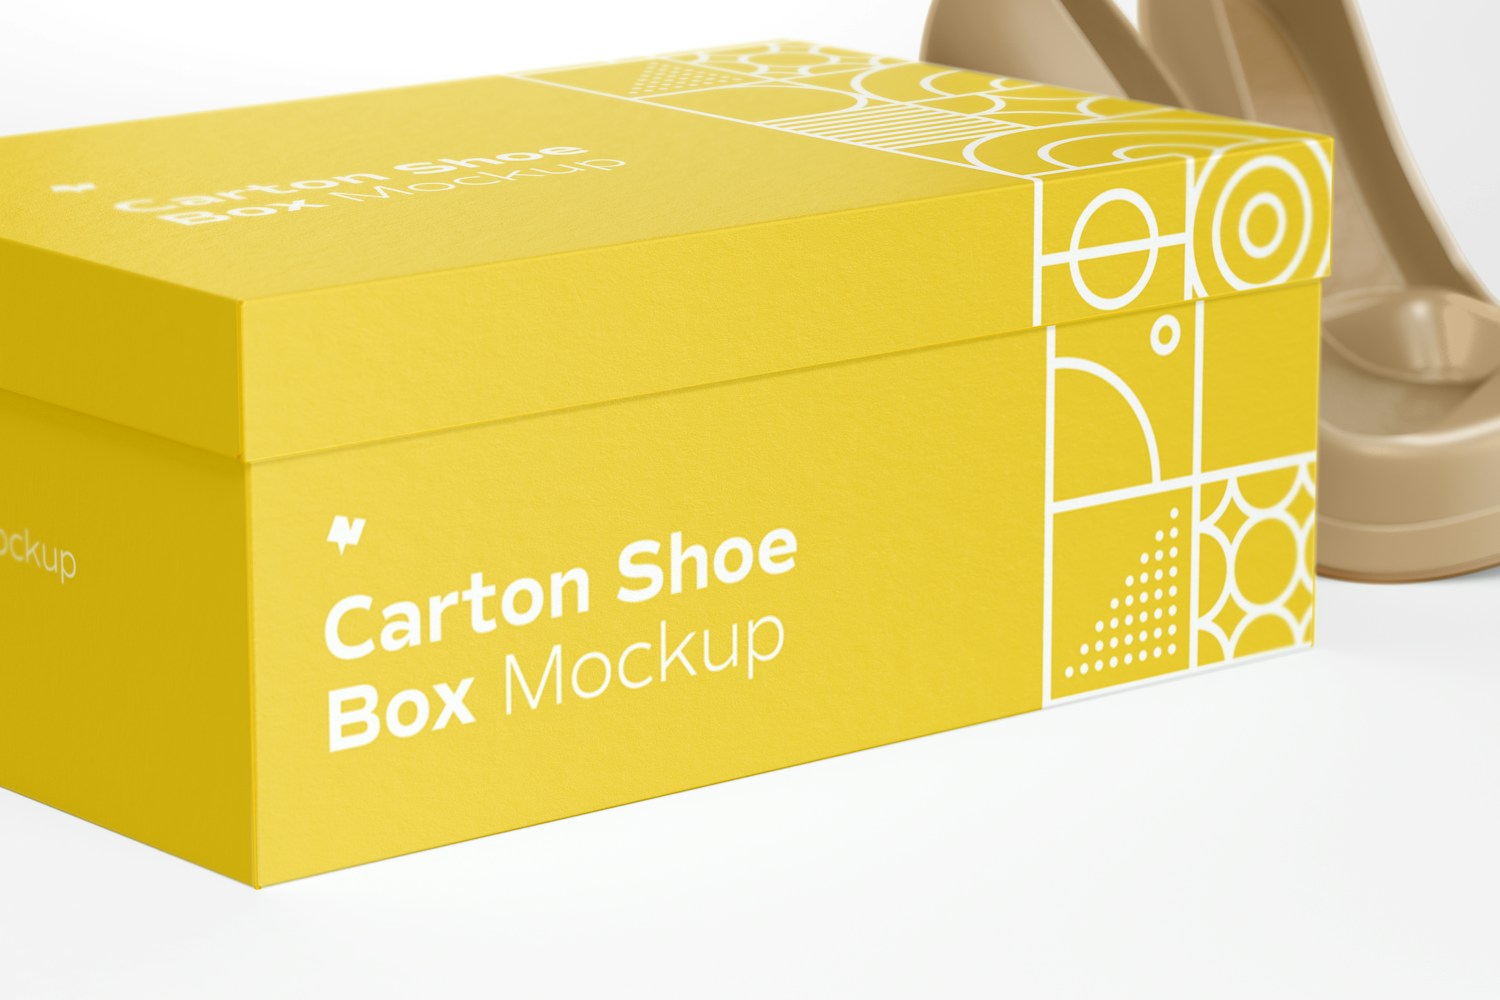 Carton Shoe Box Mockup, Close-Up